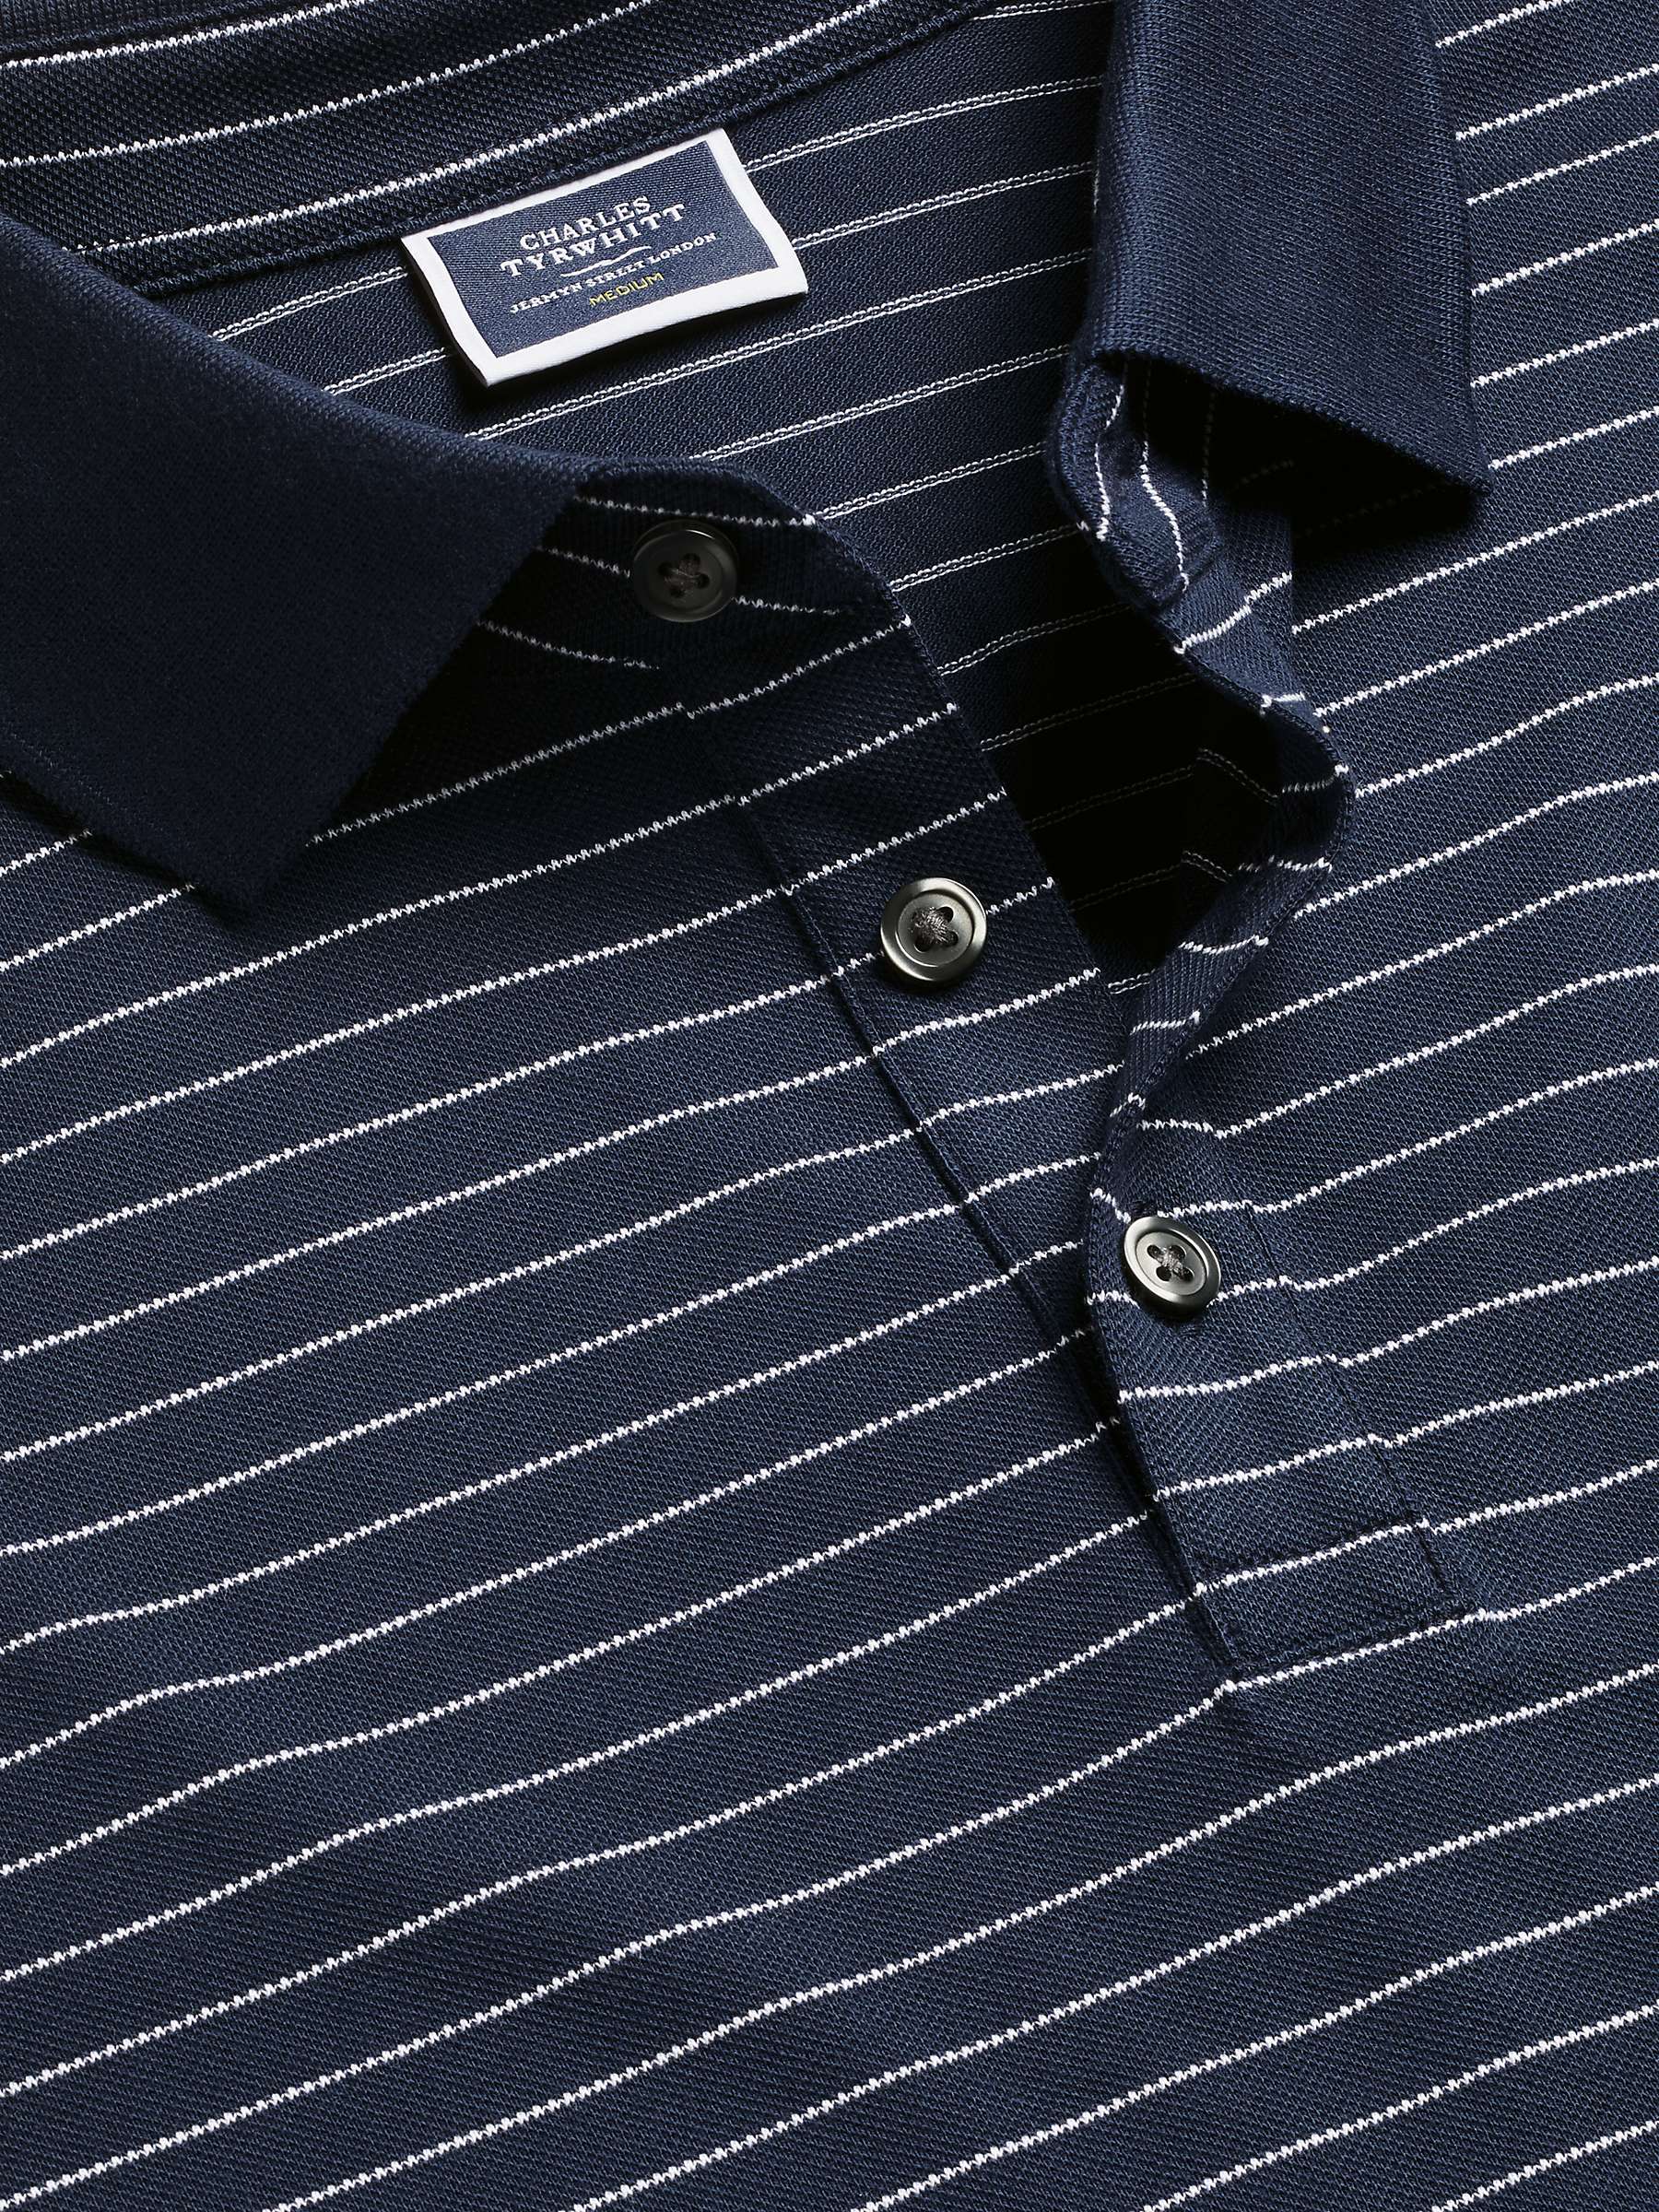 Buy Charles Tyrwhitt Stripe Pique Polo Shirt Online at johnlewis.com